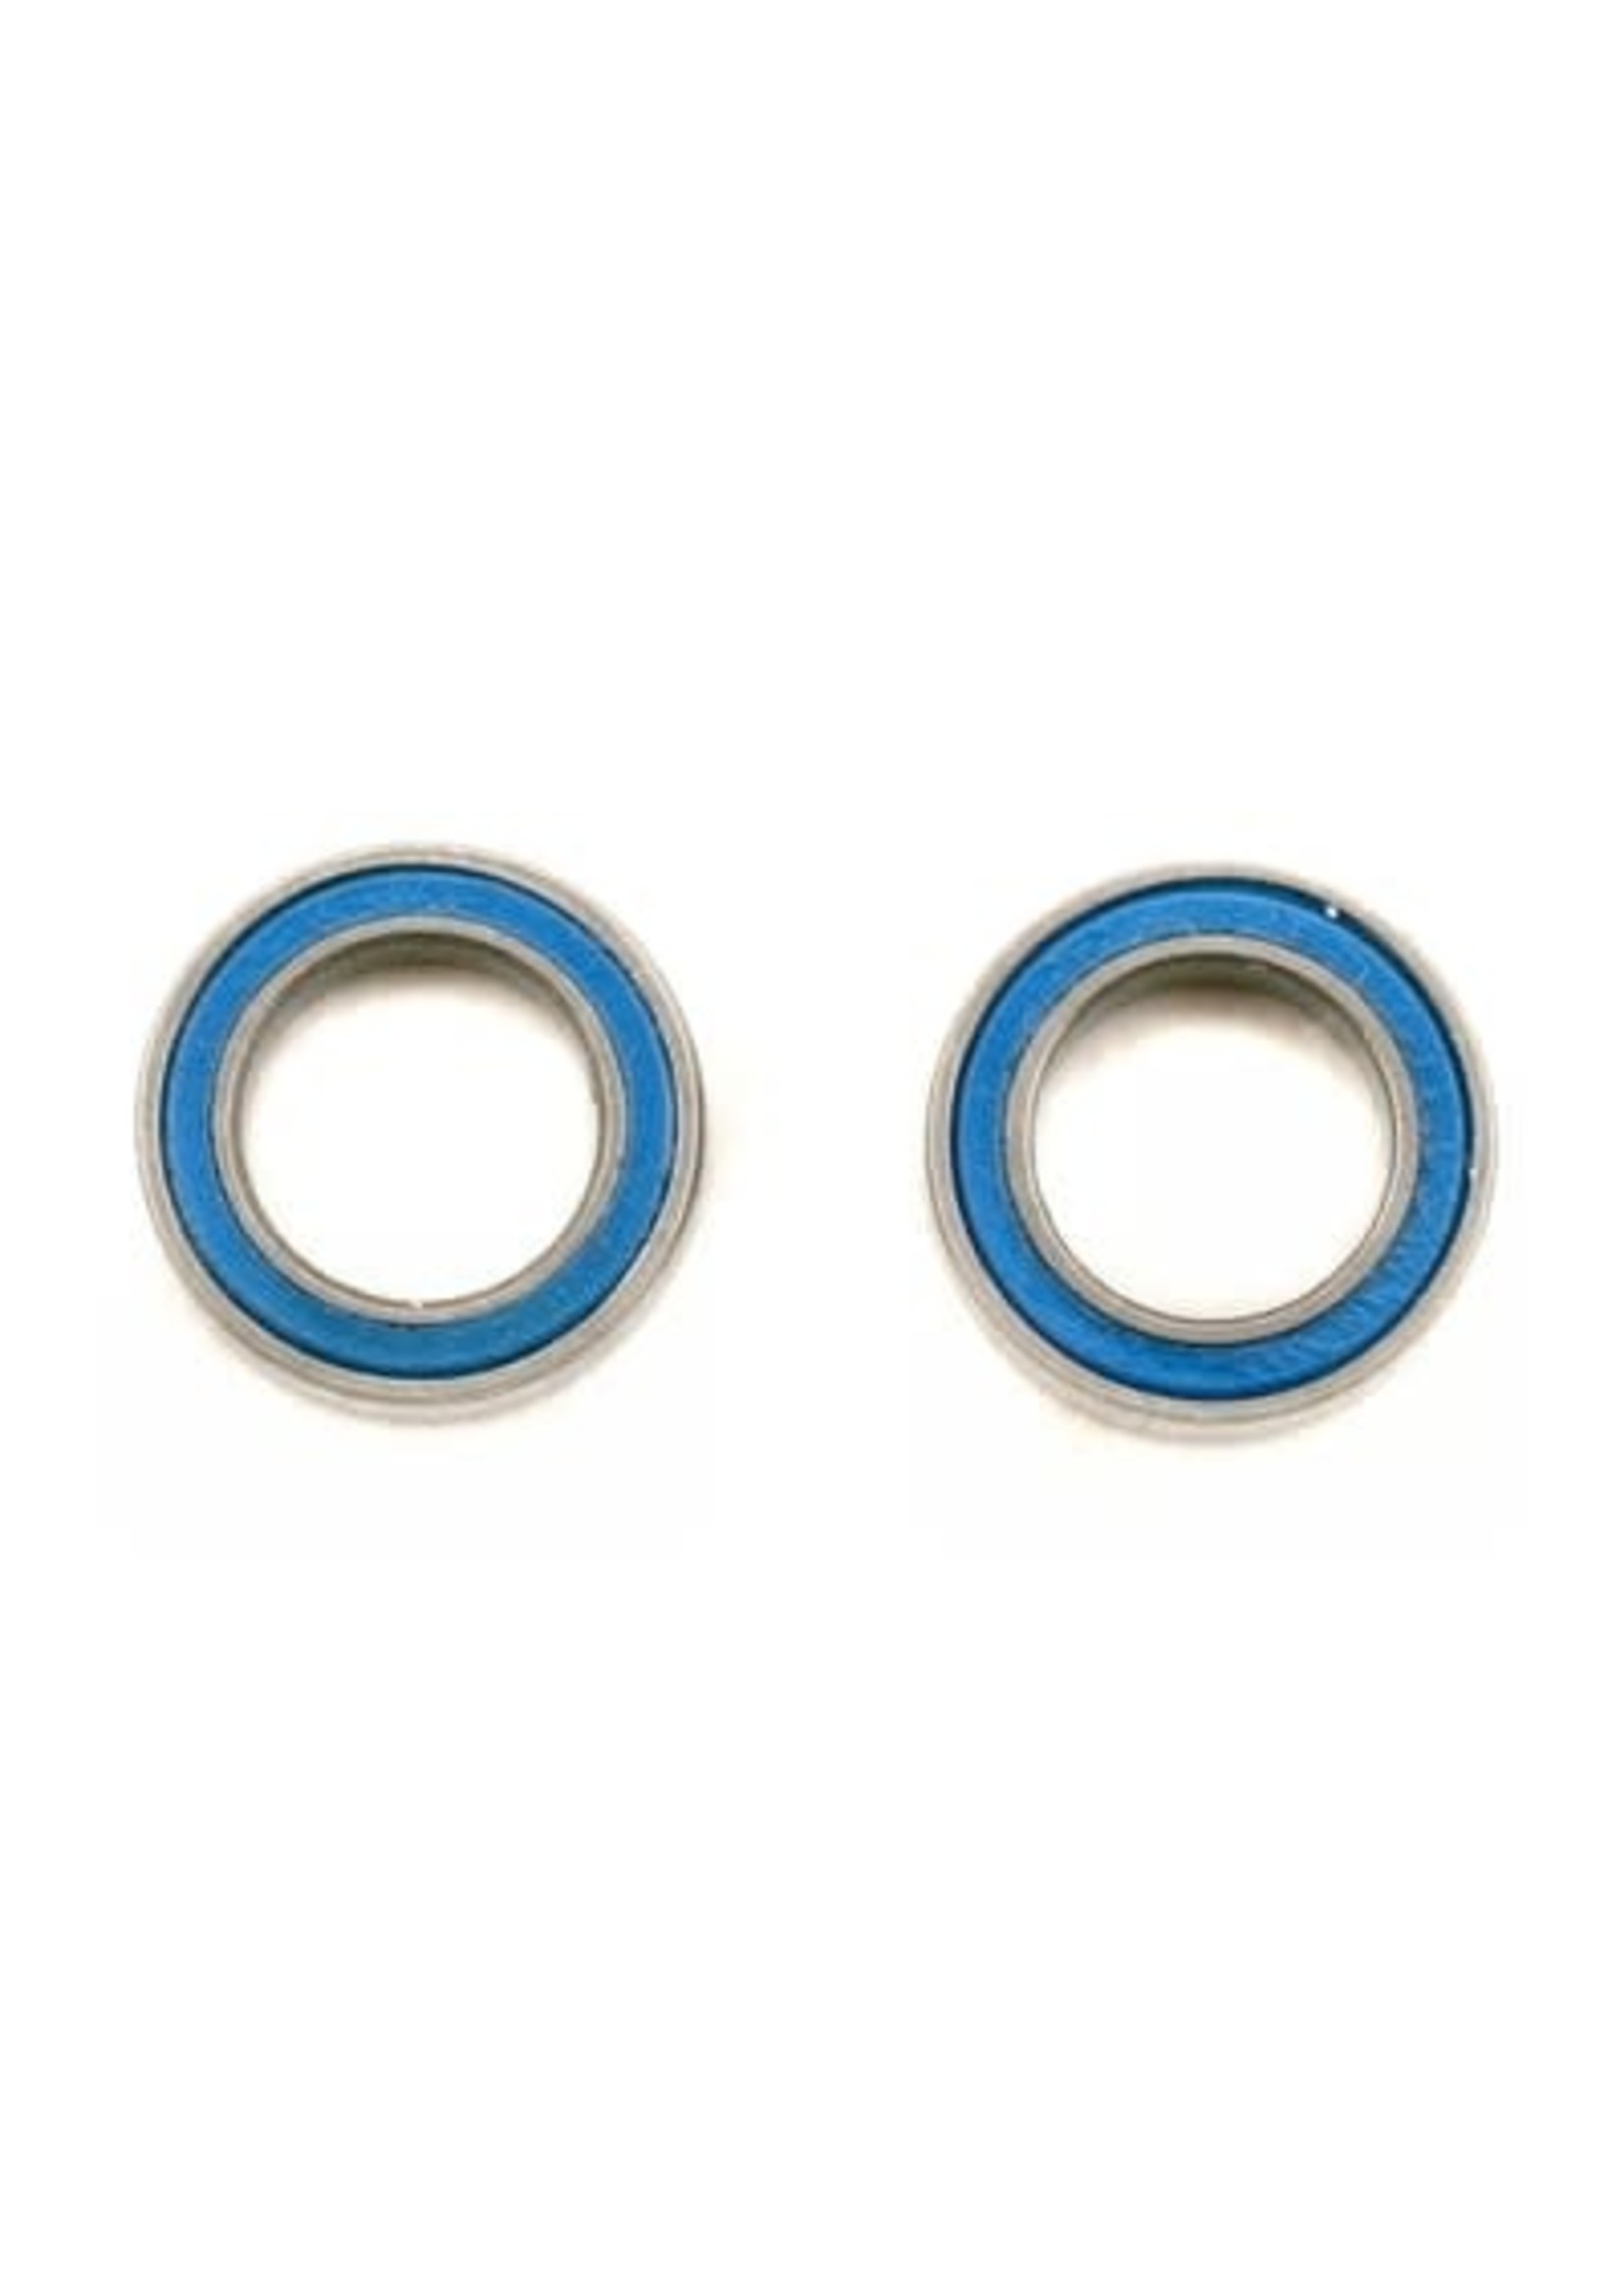 Traxxas 5114 Ball bearings, blue rubber sealed (5x8x2.5mm) (2)